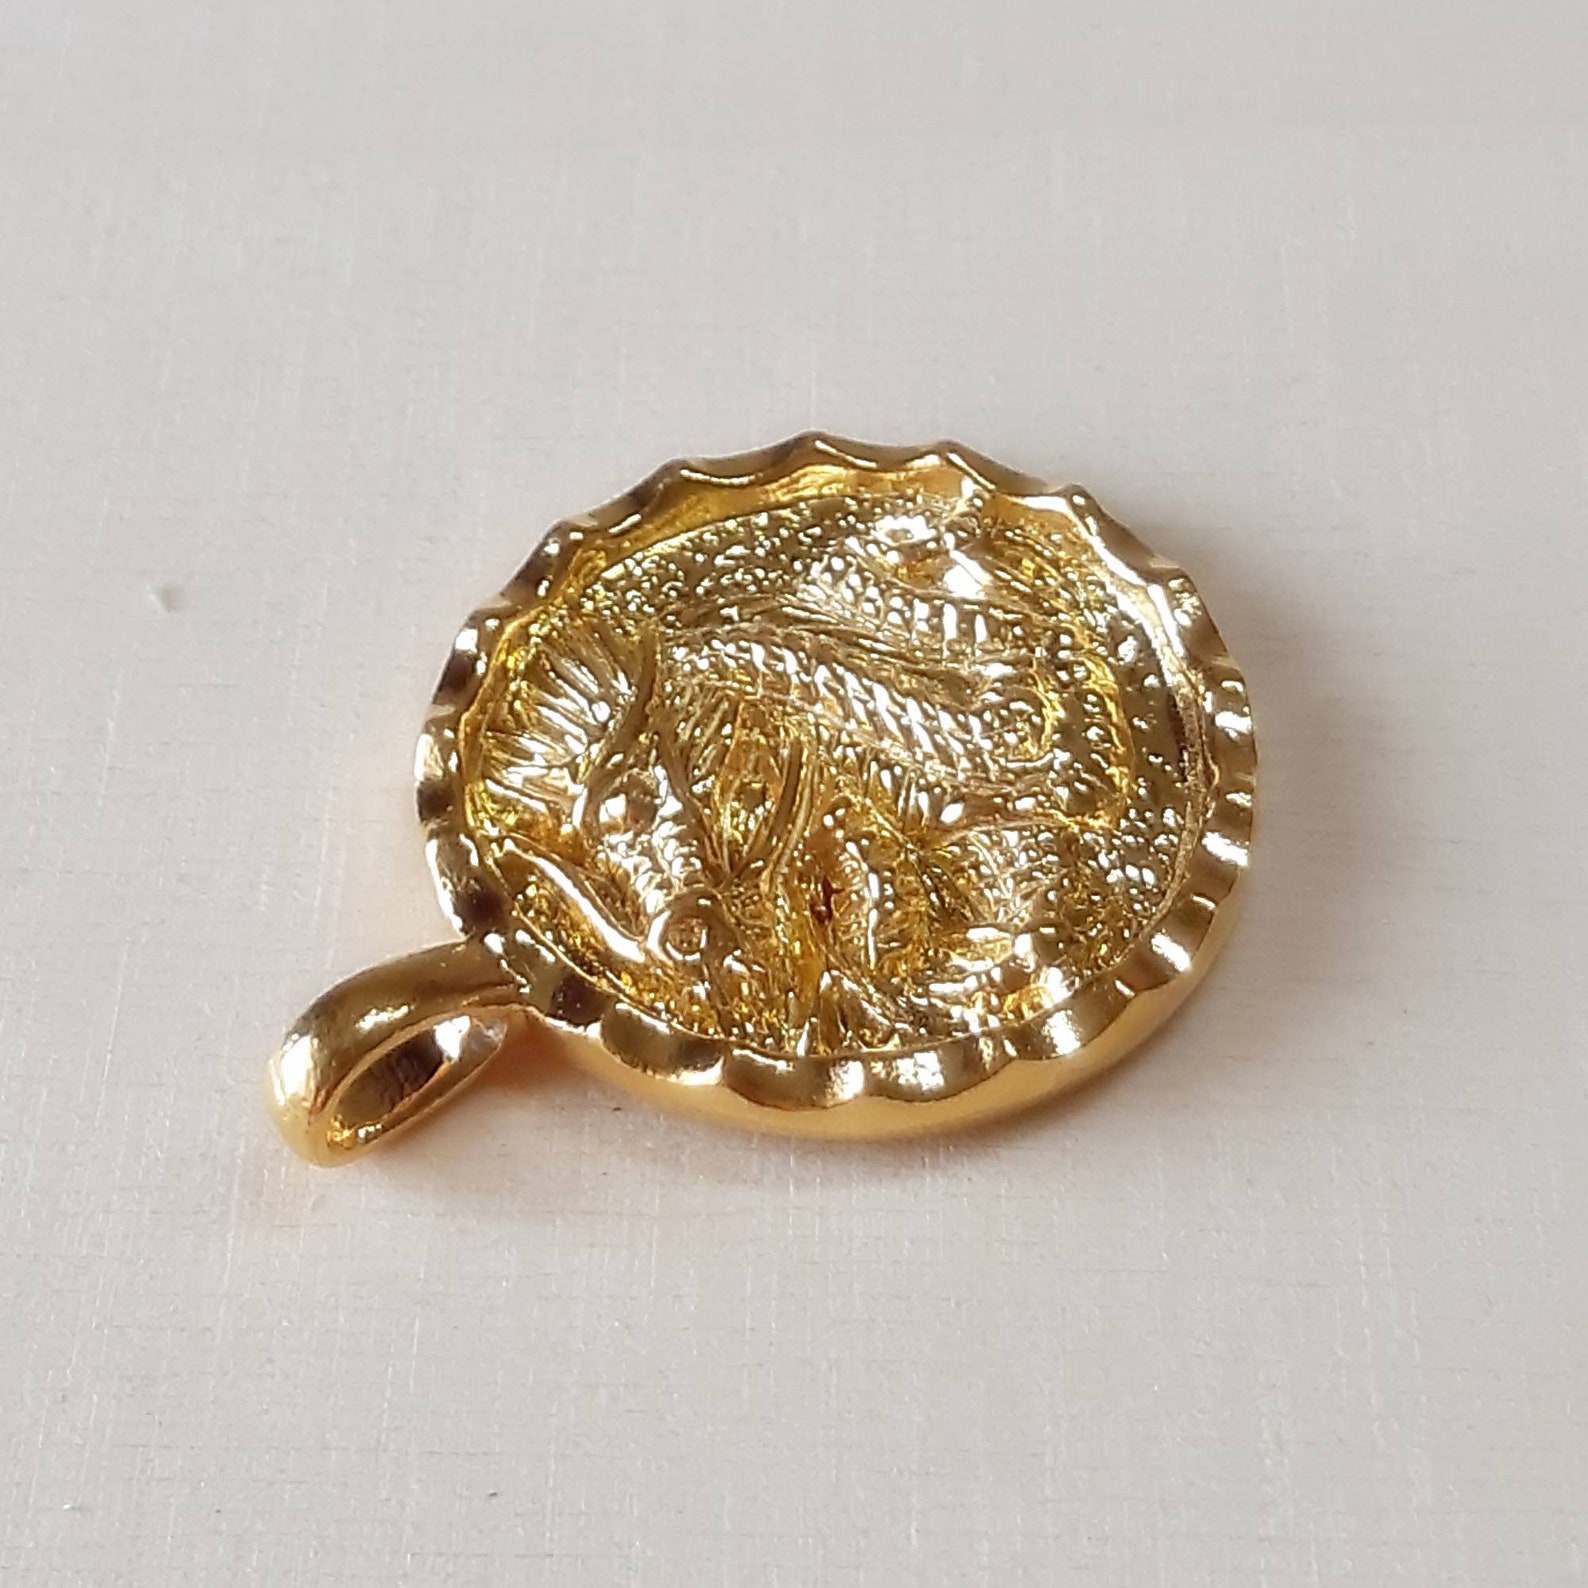 Unique 24k solid gold Dragon Pendant by Esther Lee 999 | Etsy